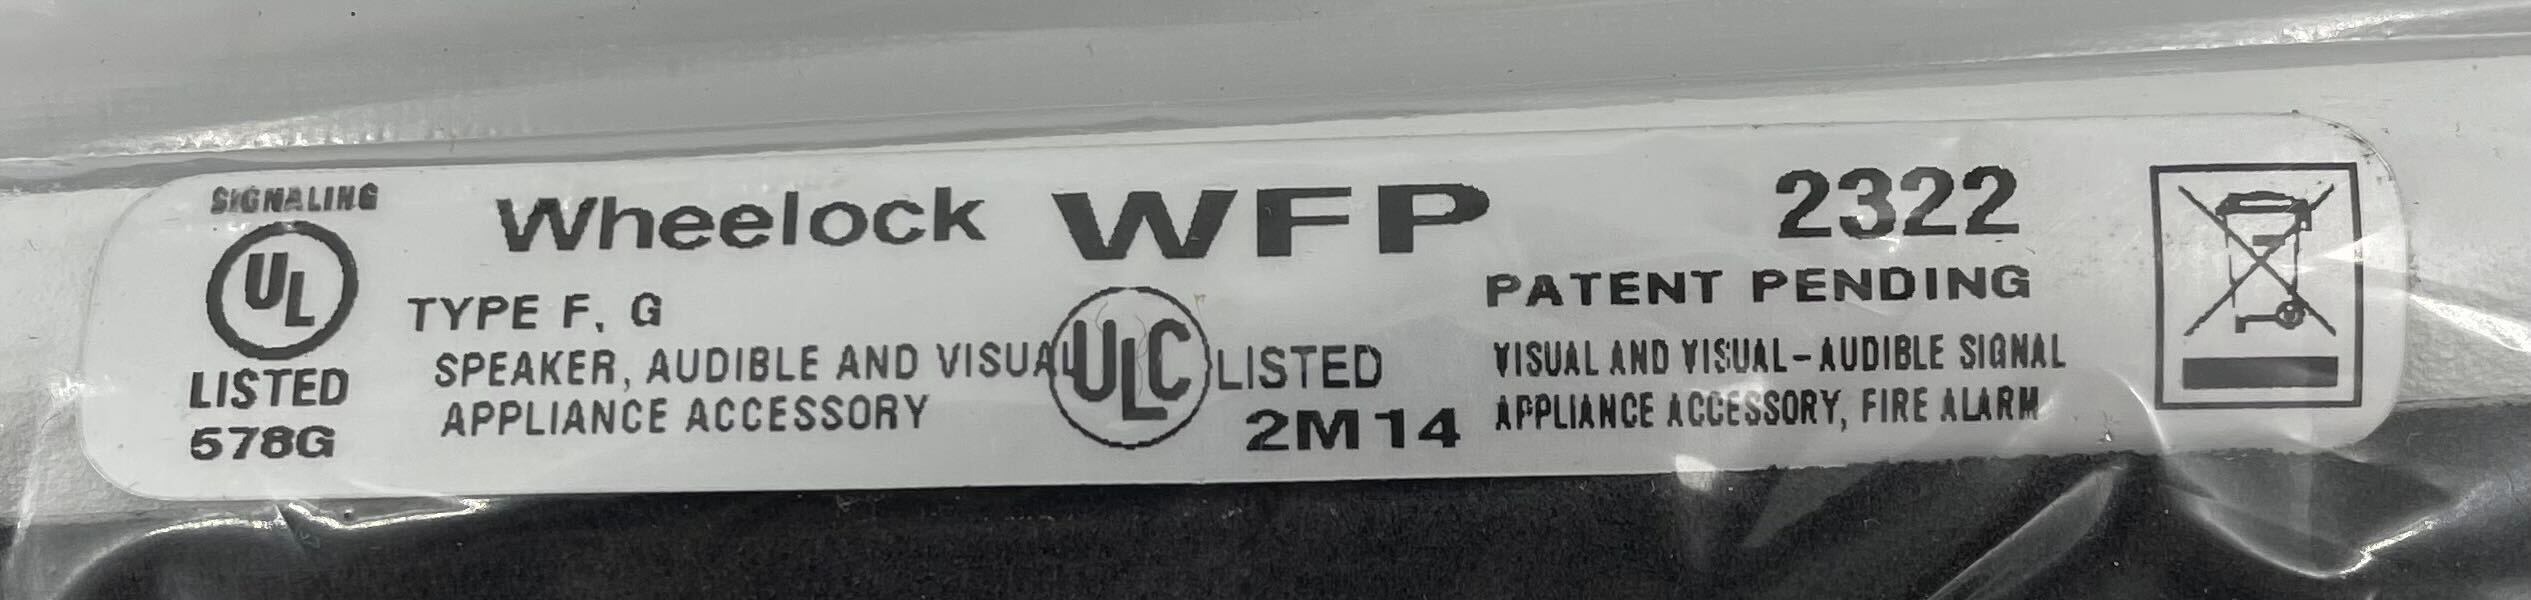 Wheelock WFP-W